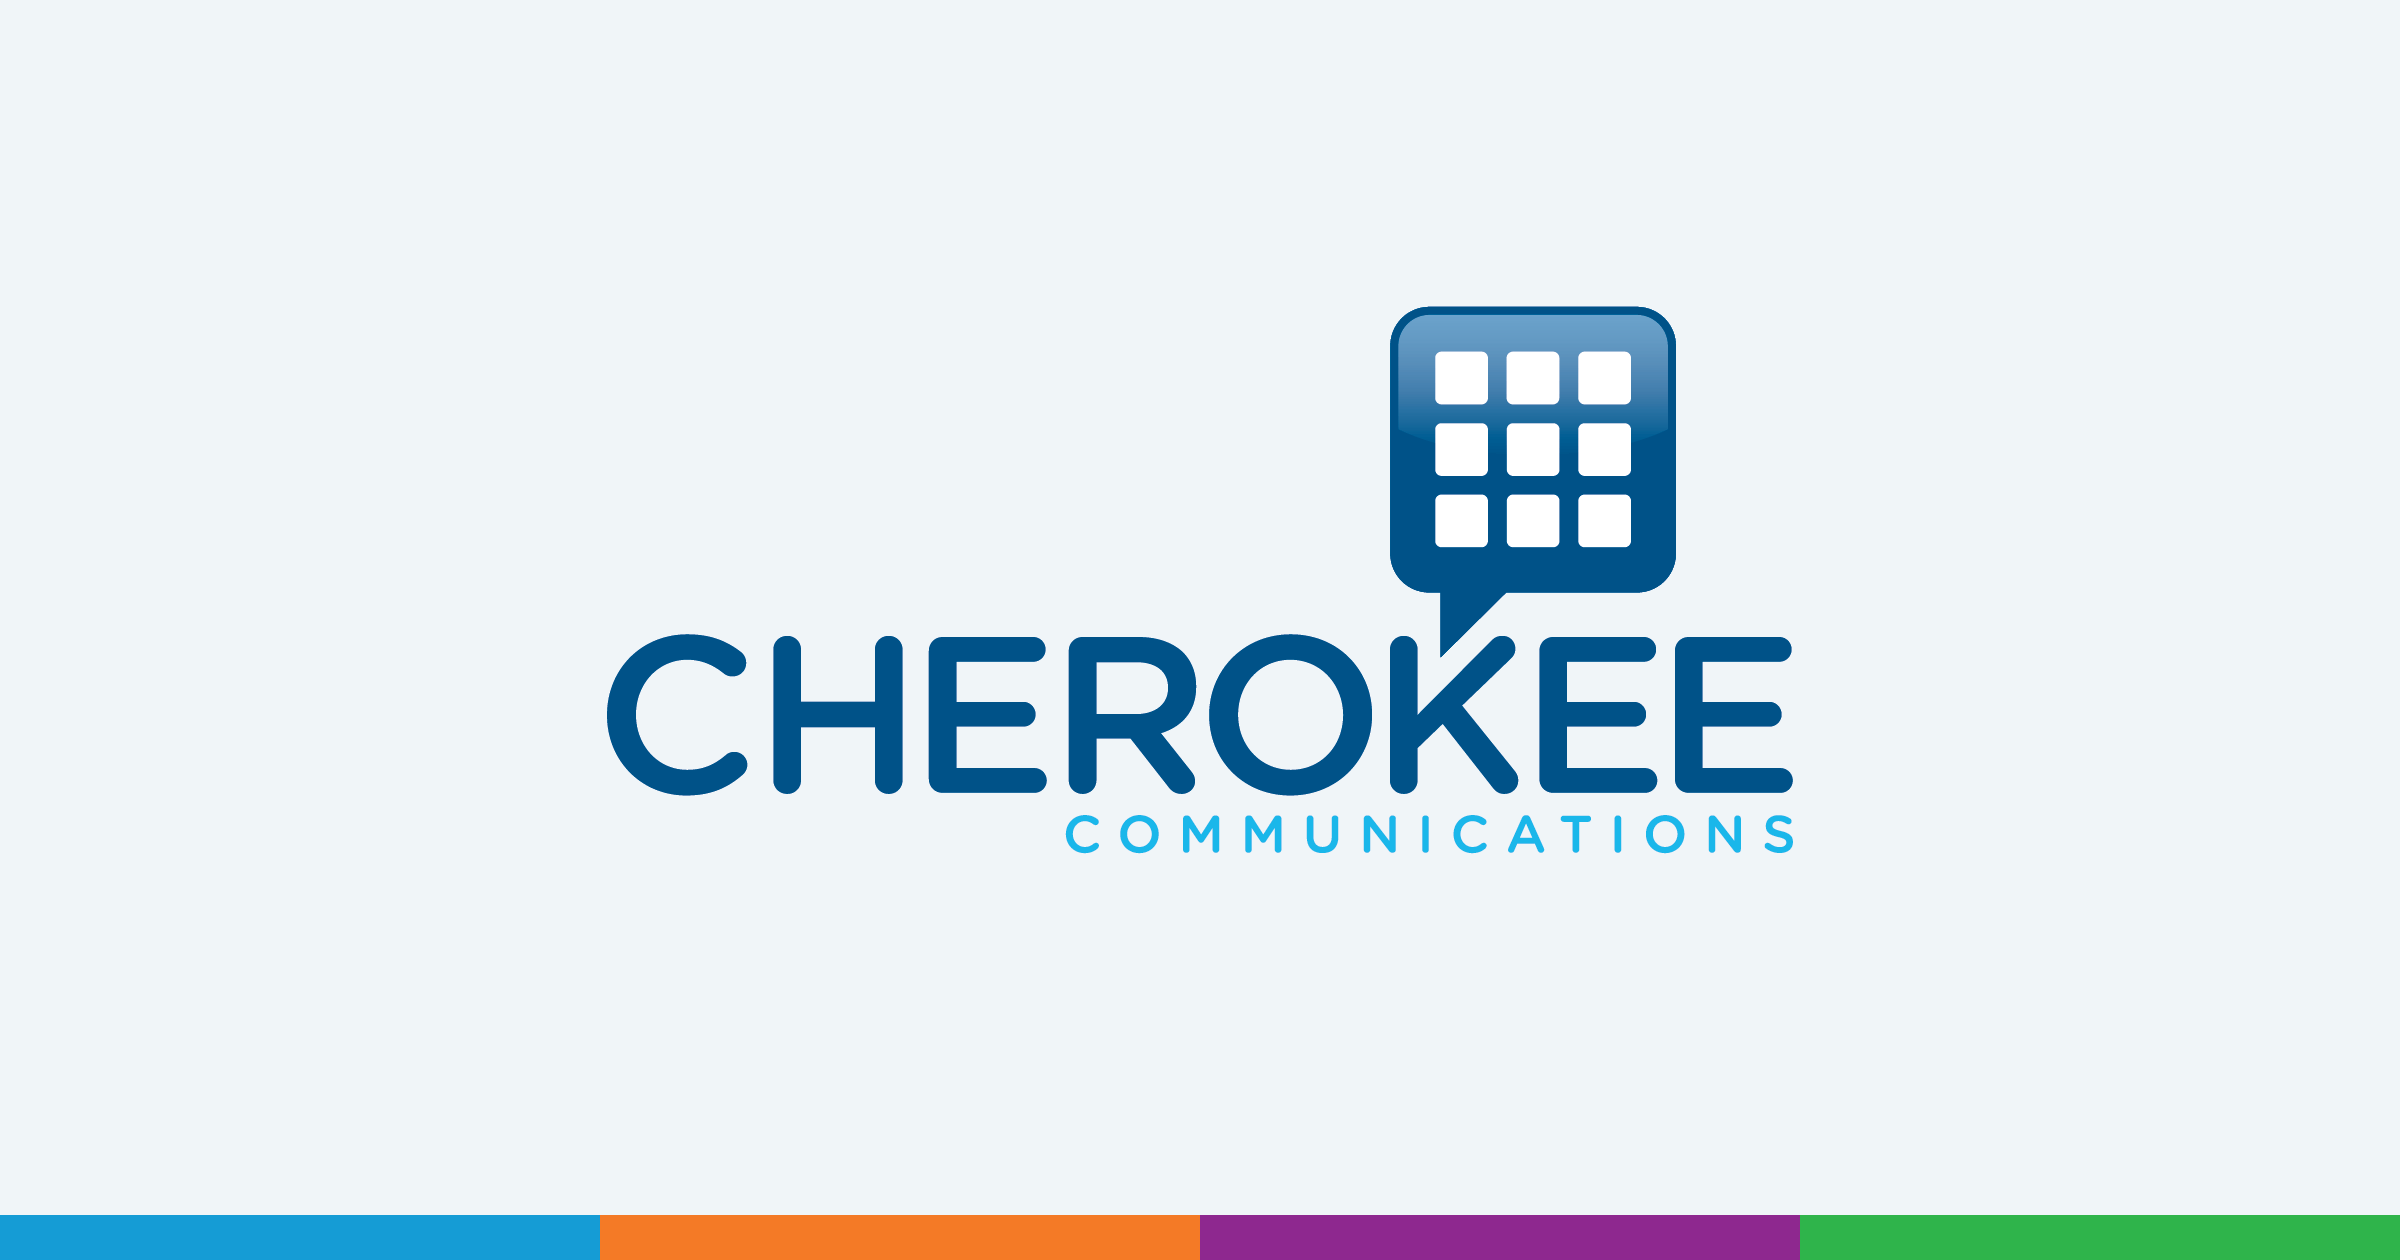 Generic Communications Logo - Cherokee Communications of Service